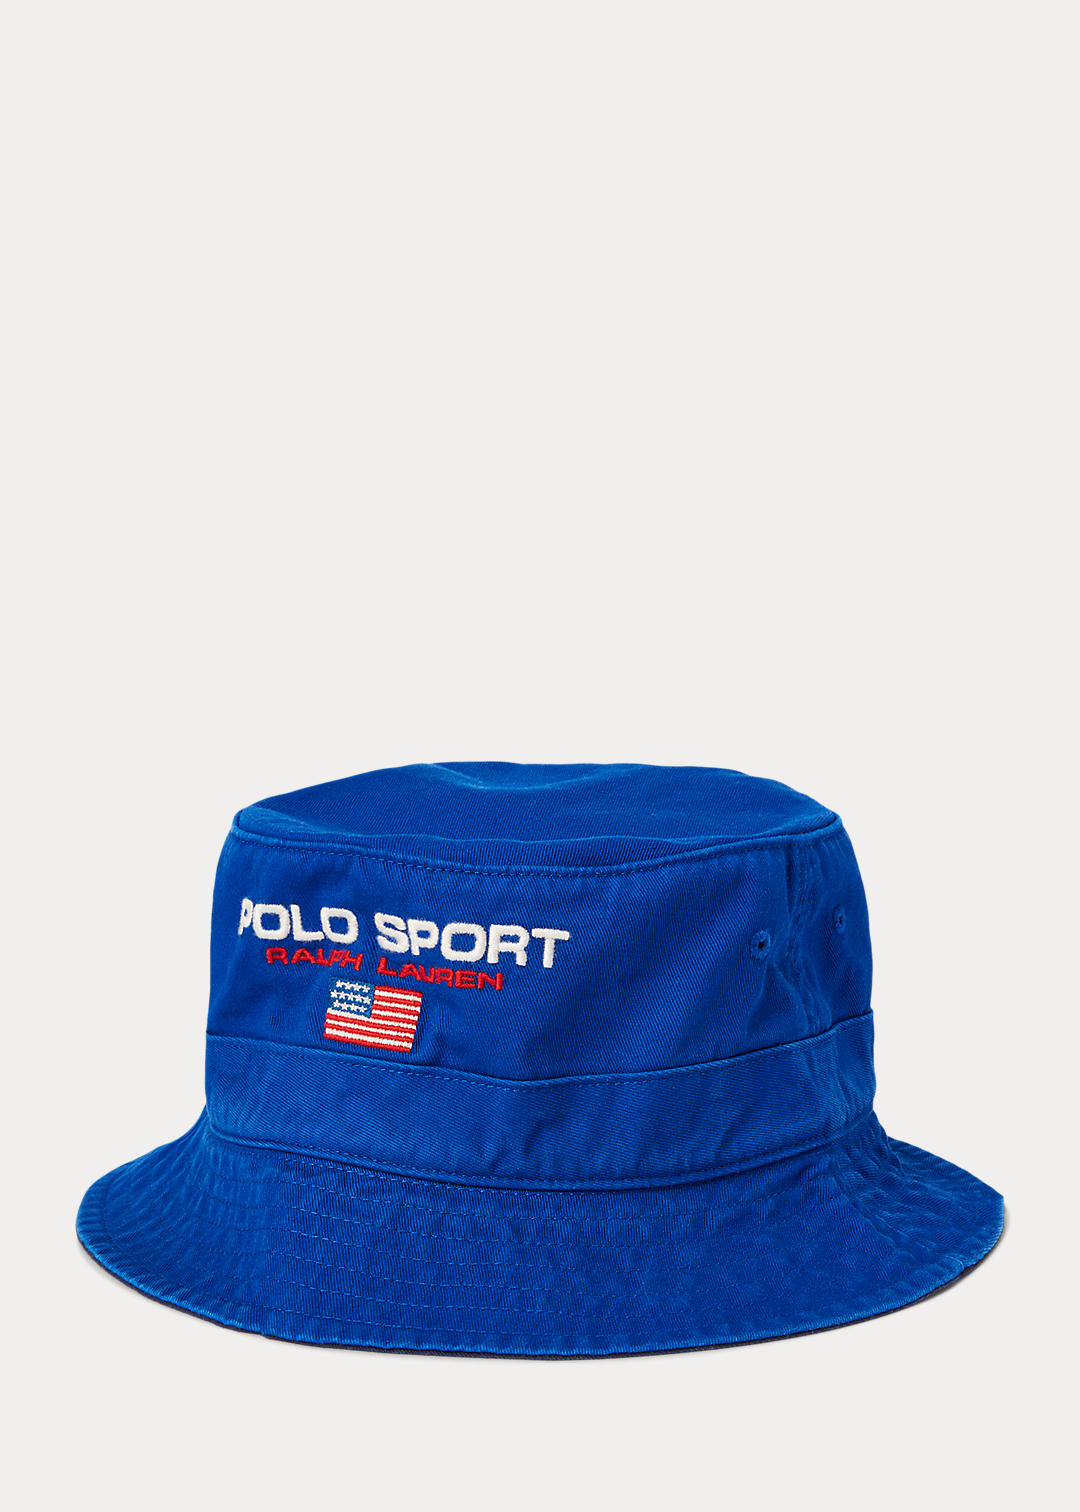 Polo Sport Chino Bucket Hat